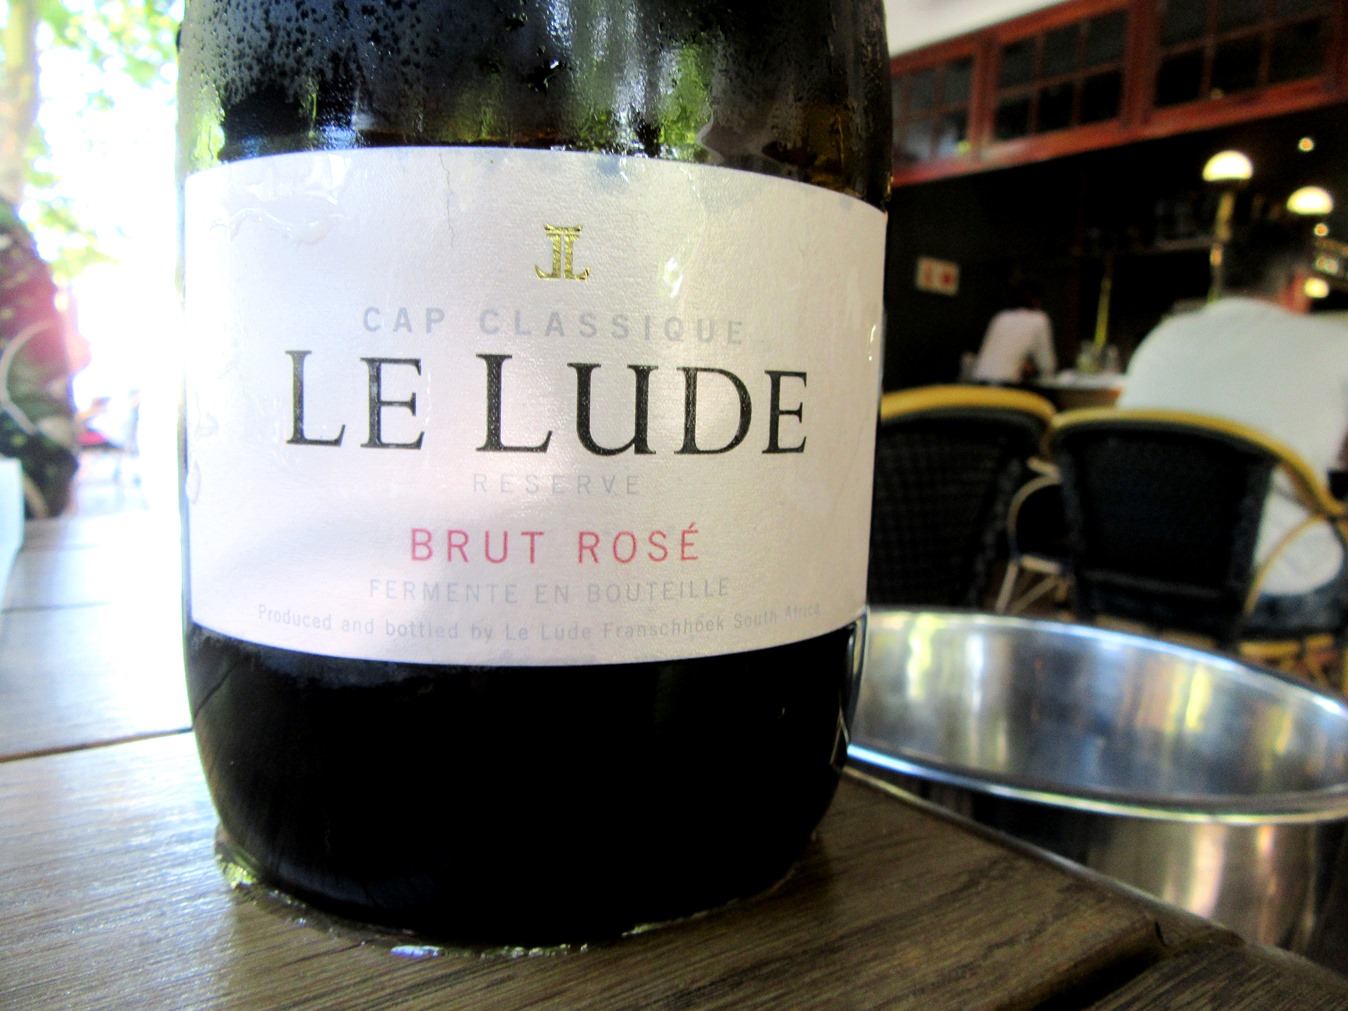 Le Lude, Methode Cap Classique Reserve Rosé Brut, Western Cape, South Africa, Wine Casual